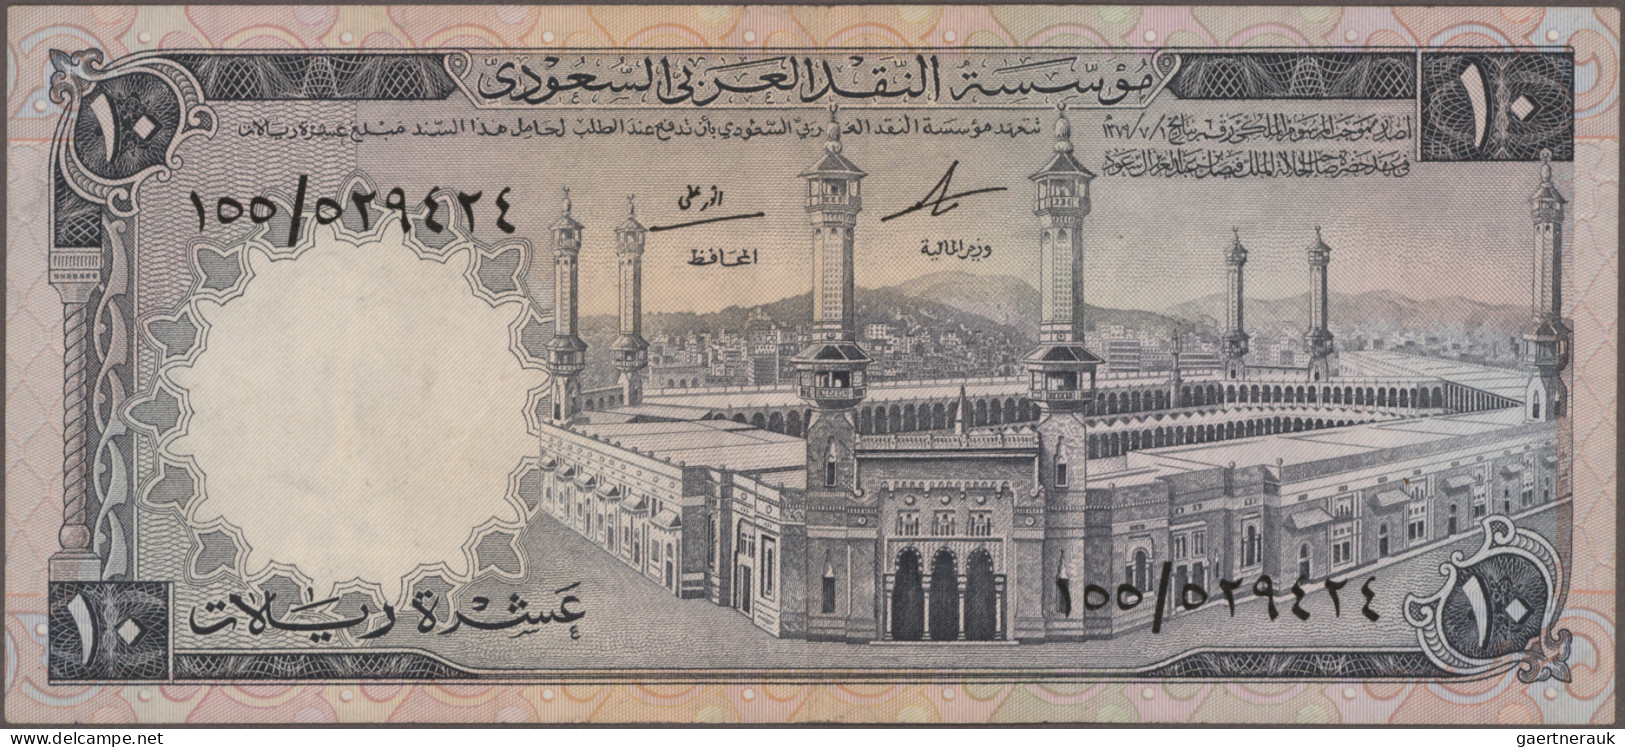 Saudi Arabia: Saudi Arabian Monetary Agency, Lot With 5 Banknotes, Series AH1379 - Arabia Saudita